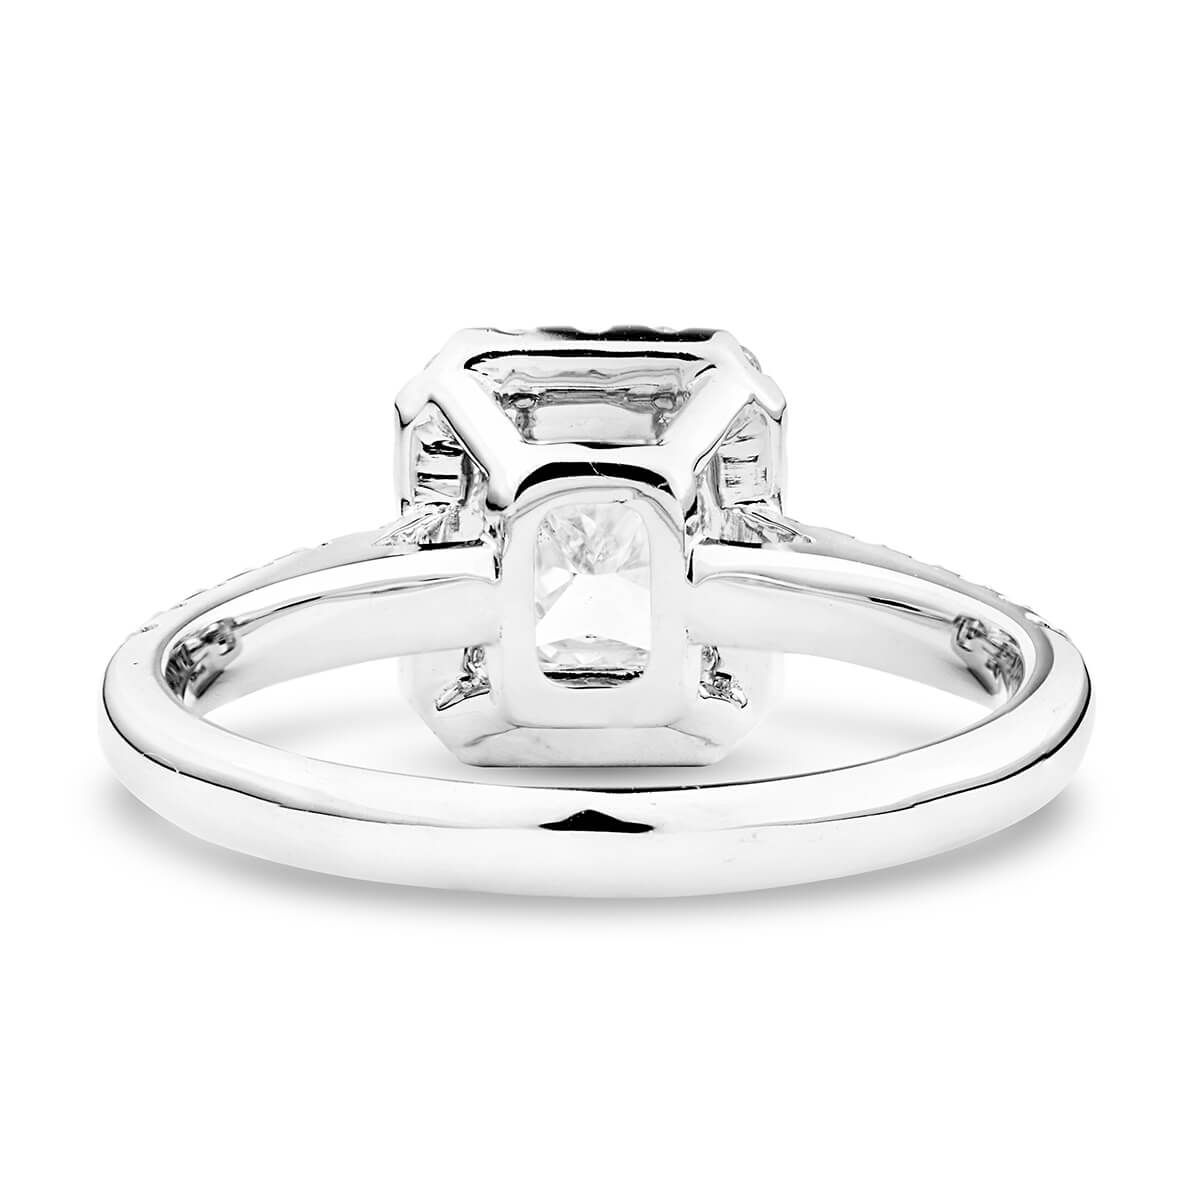  White Diamond Ring, 1.40 Ct. TW, Radiant shape, GIA Certified, 6252680610